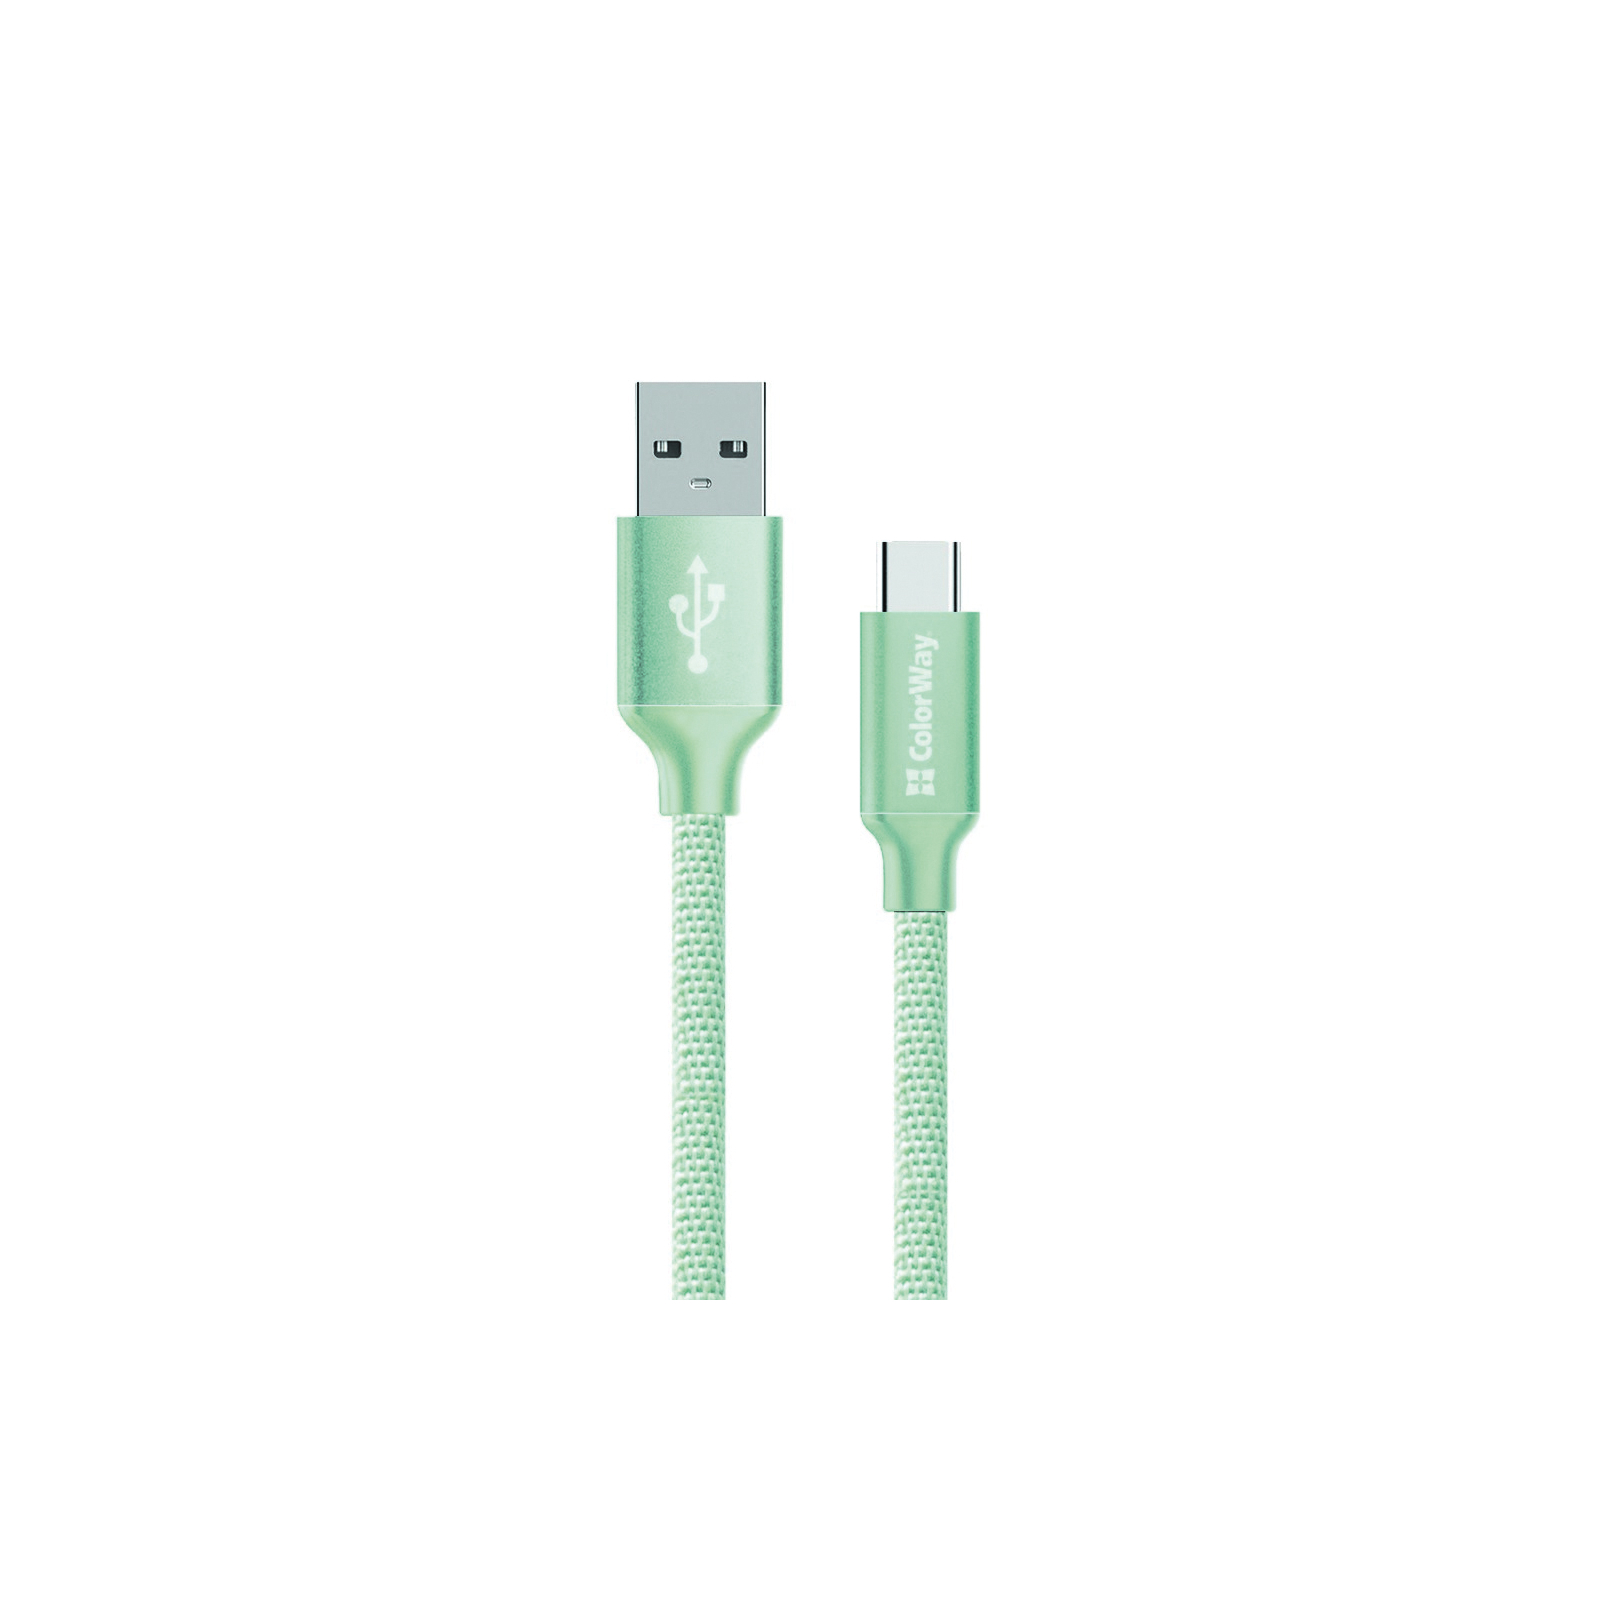 Дата кабель USB 2.0 AM to Type-C mint ColorWay (CW-CBUC003-MT)